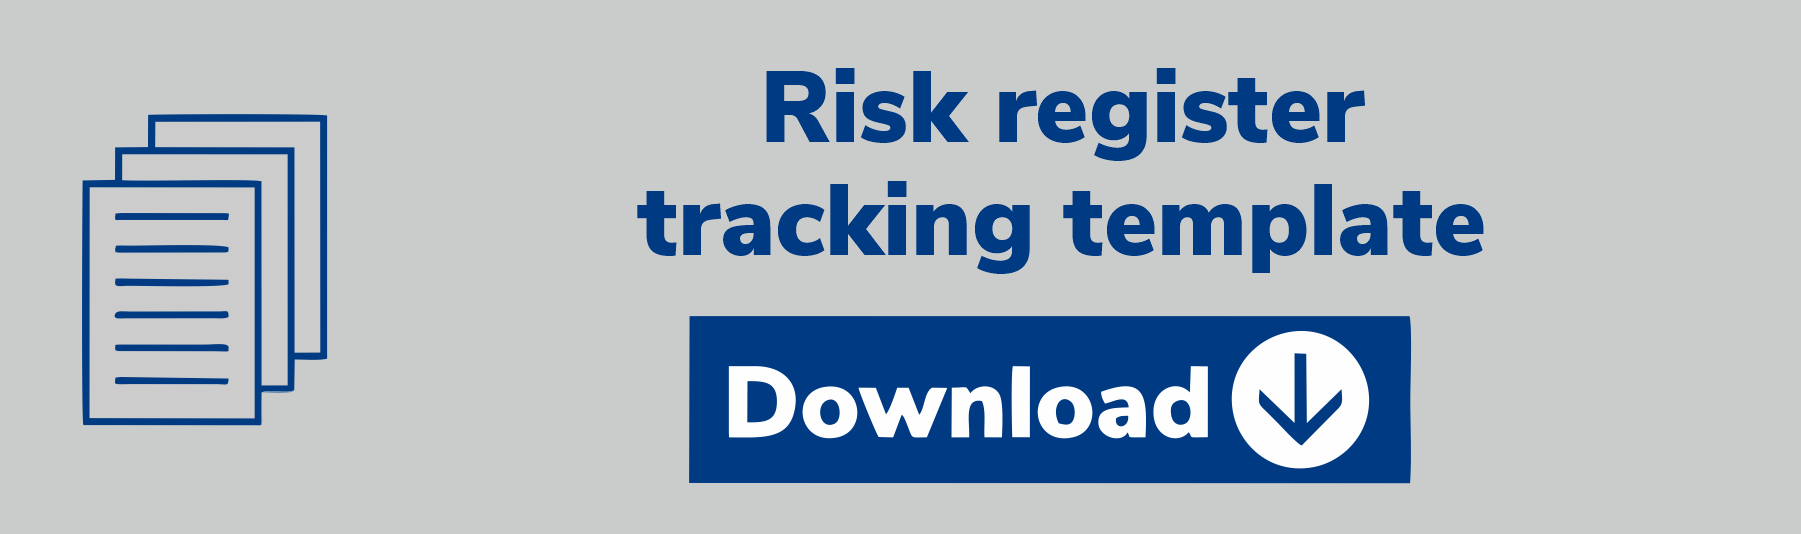 Risk register tracking template